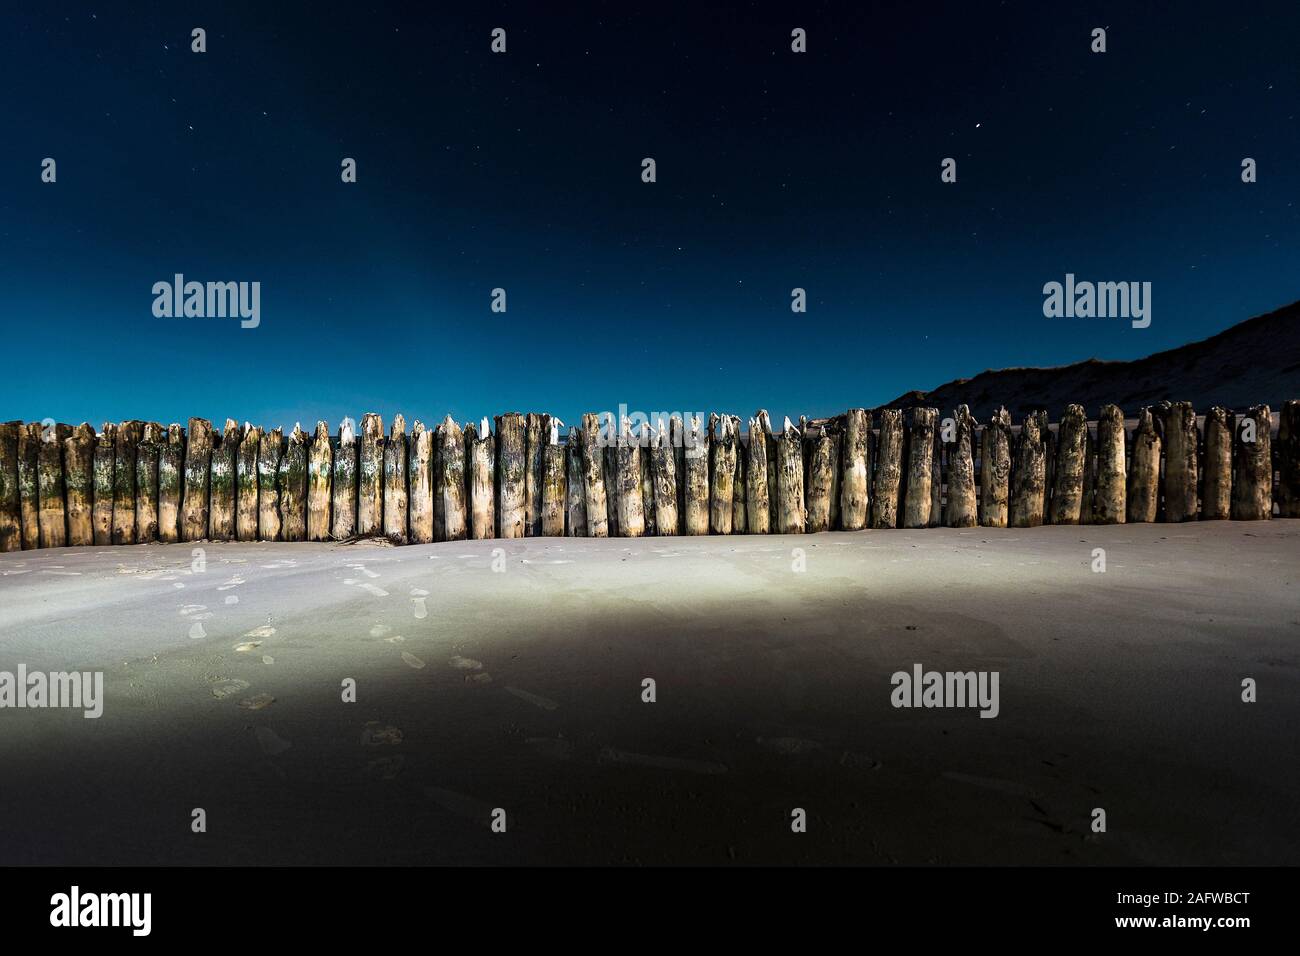 Sheet piling wall illuminated on beach at night Stock Photo